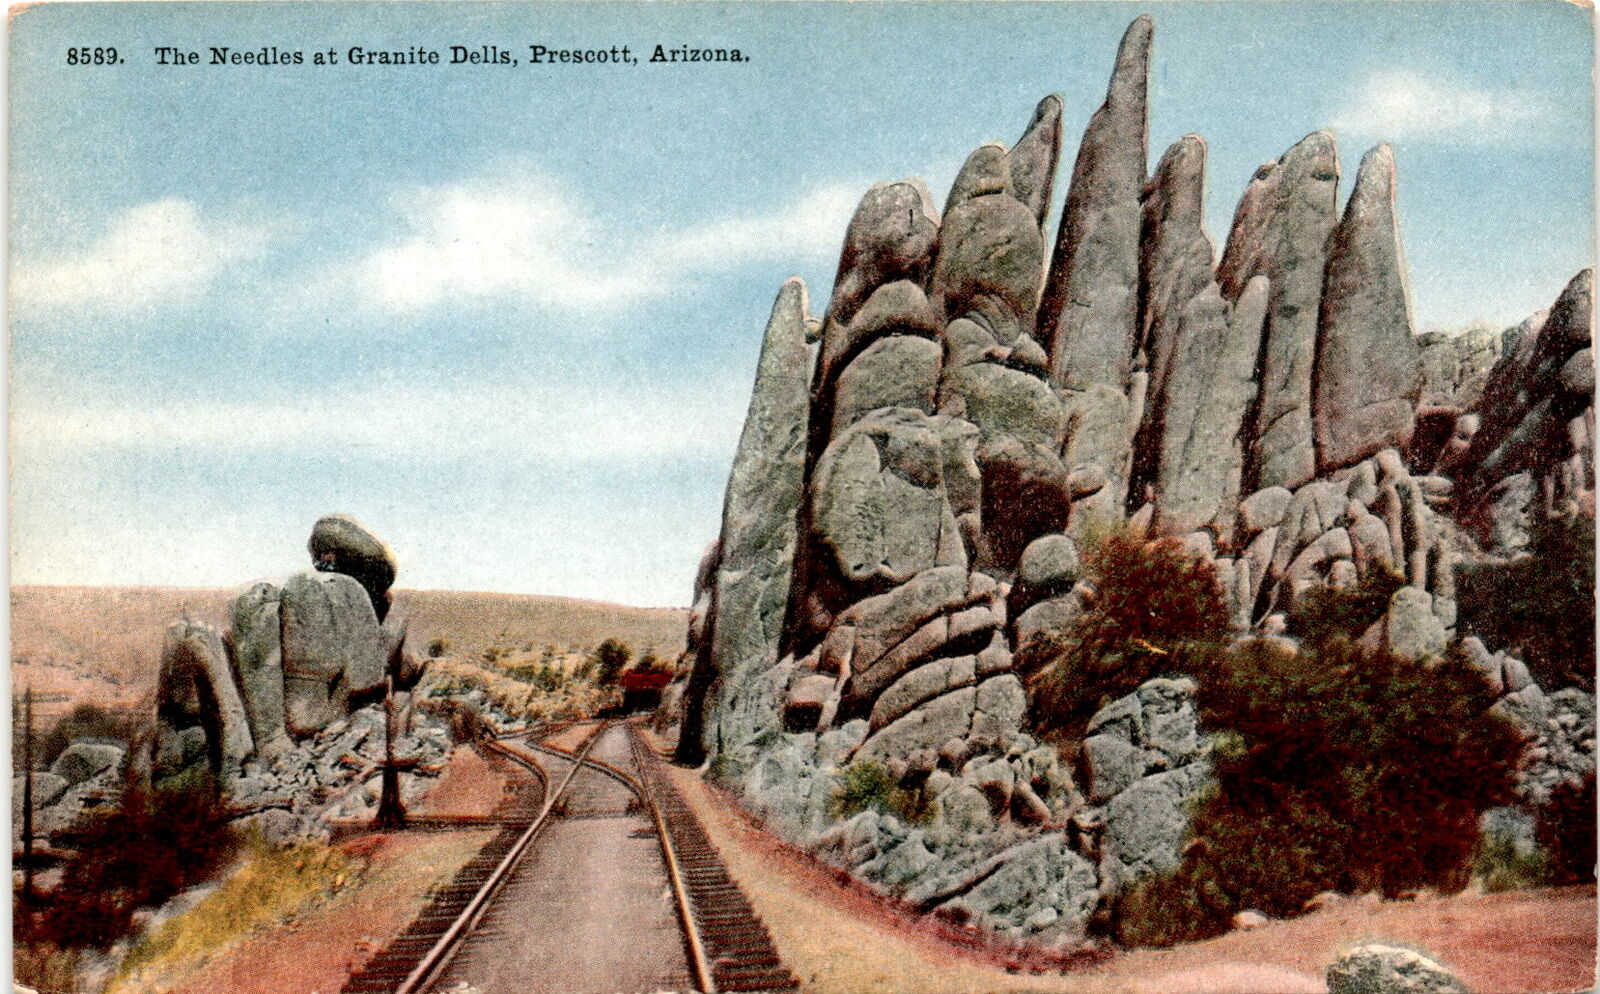 Granite Dells, Prescott, Arizona, The Needles, large granite boulders, Postcard